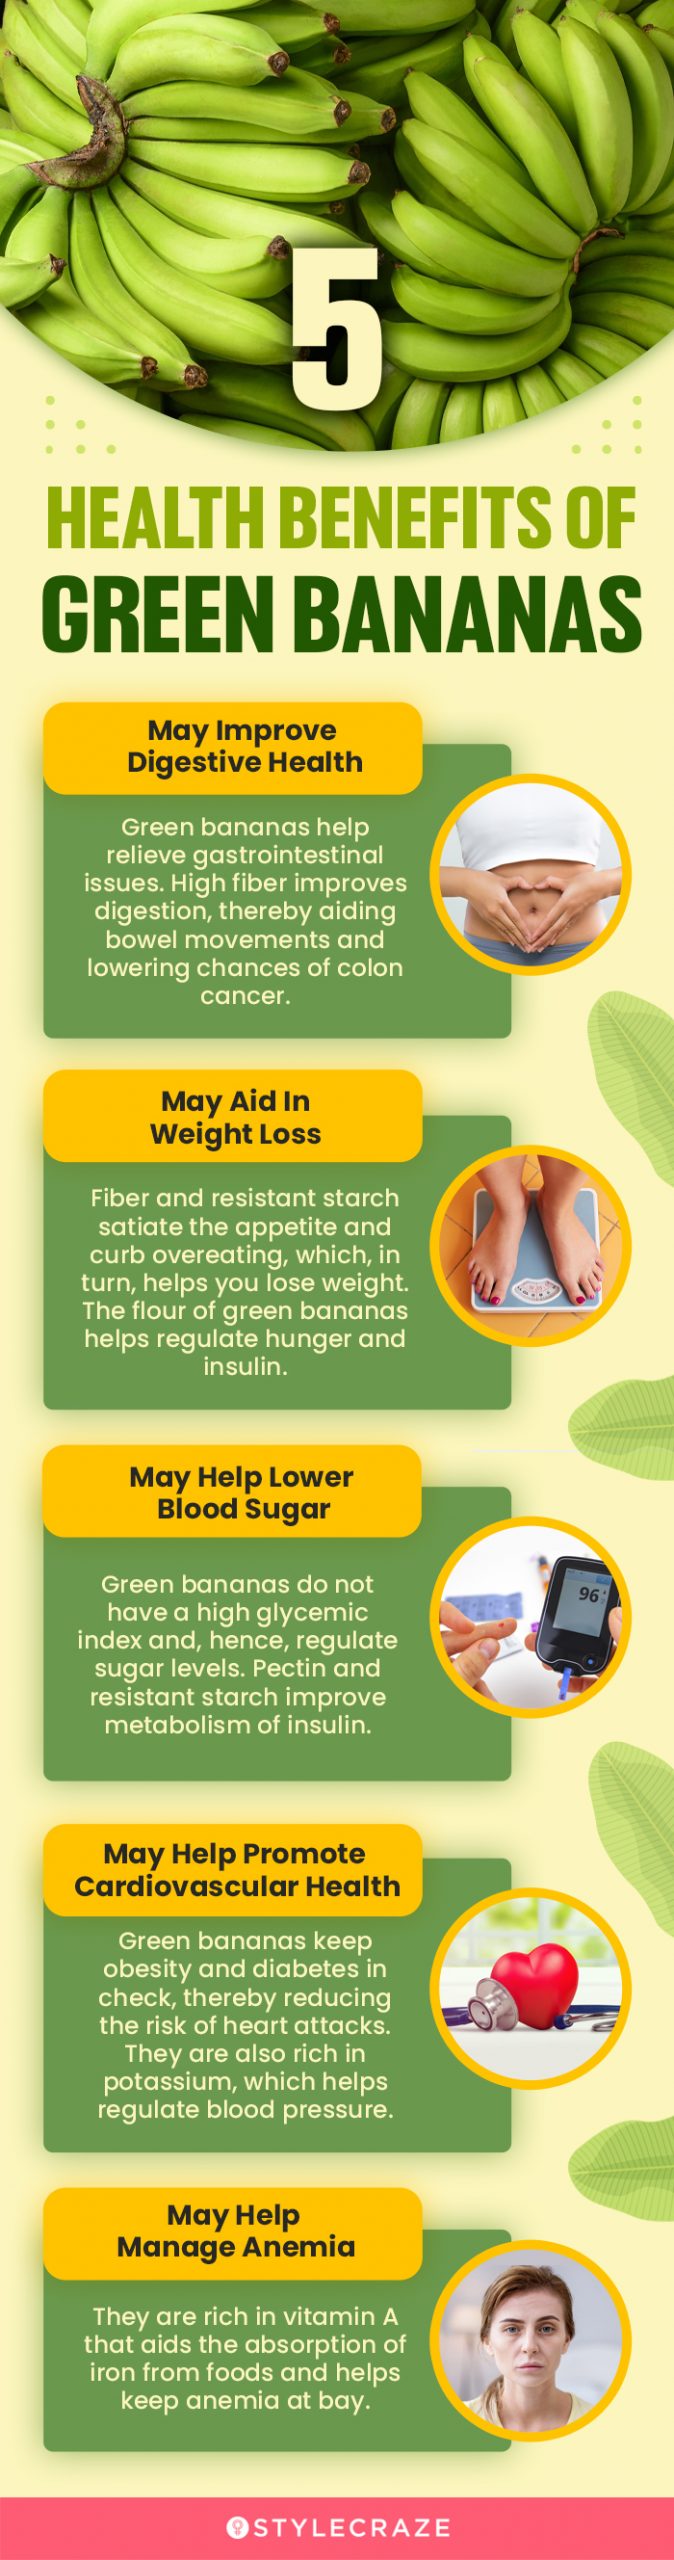 5 health benefits of green bananas (infographic)